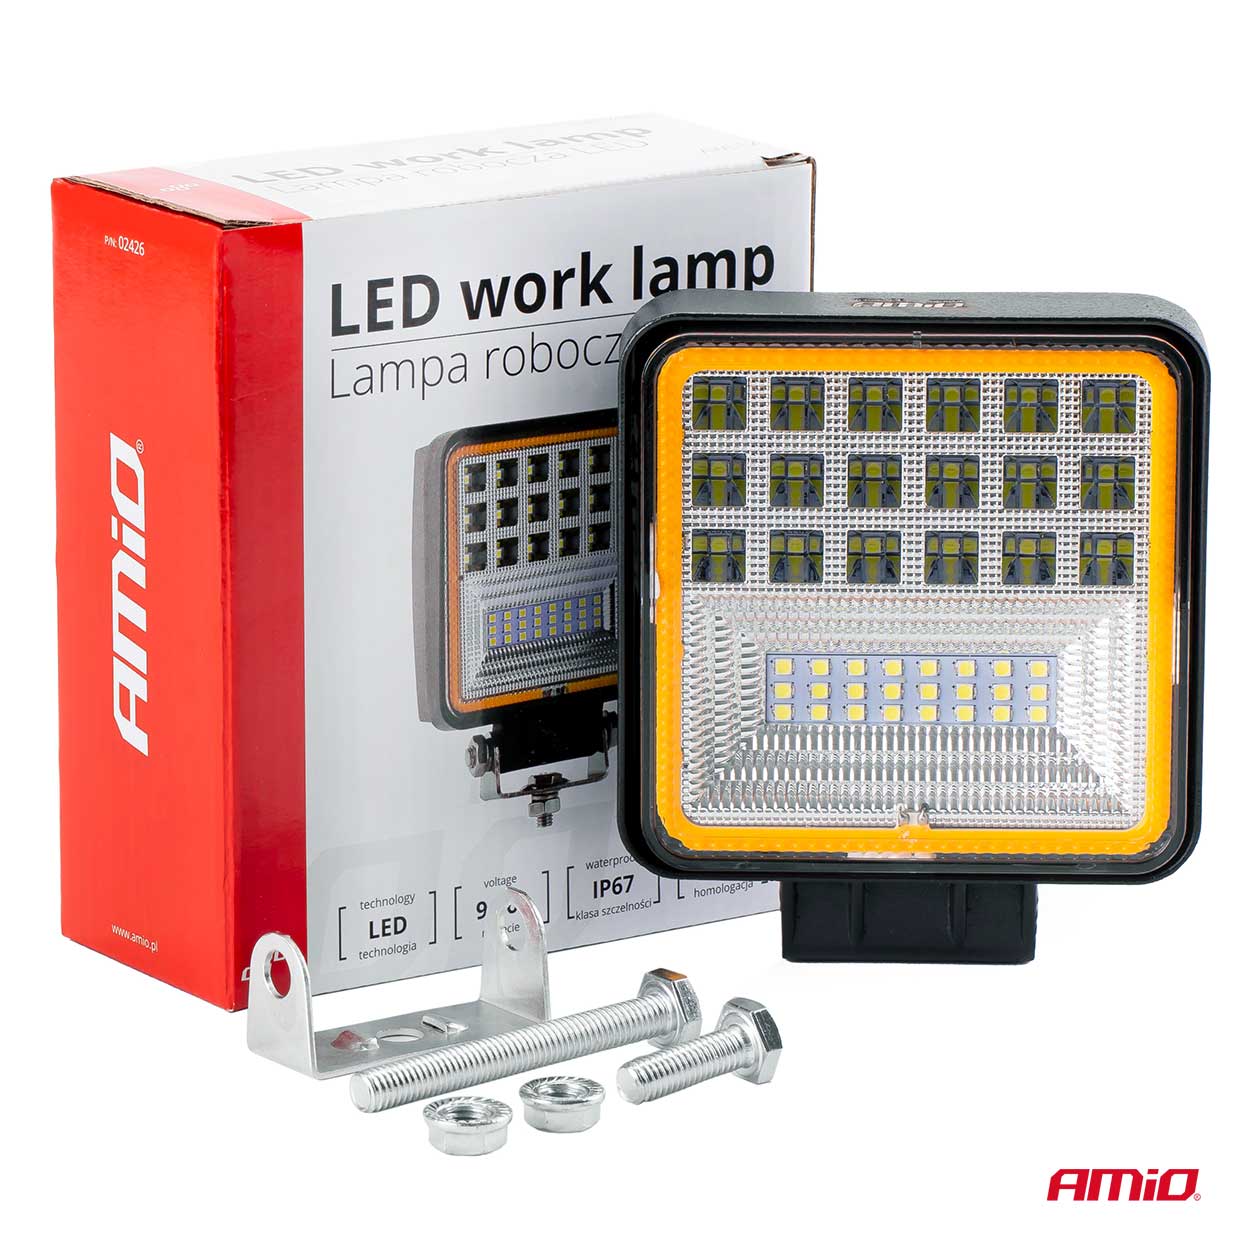 Working lamp AWL12 42 LED COMBO 2 function, 9-36V thumb